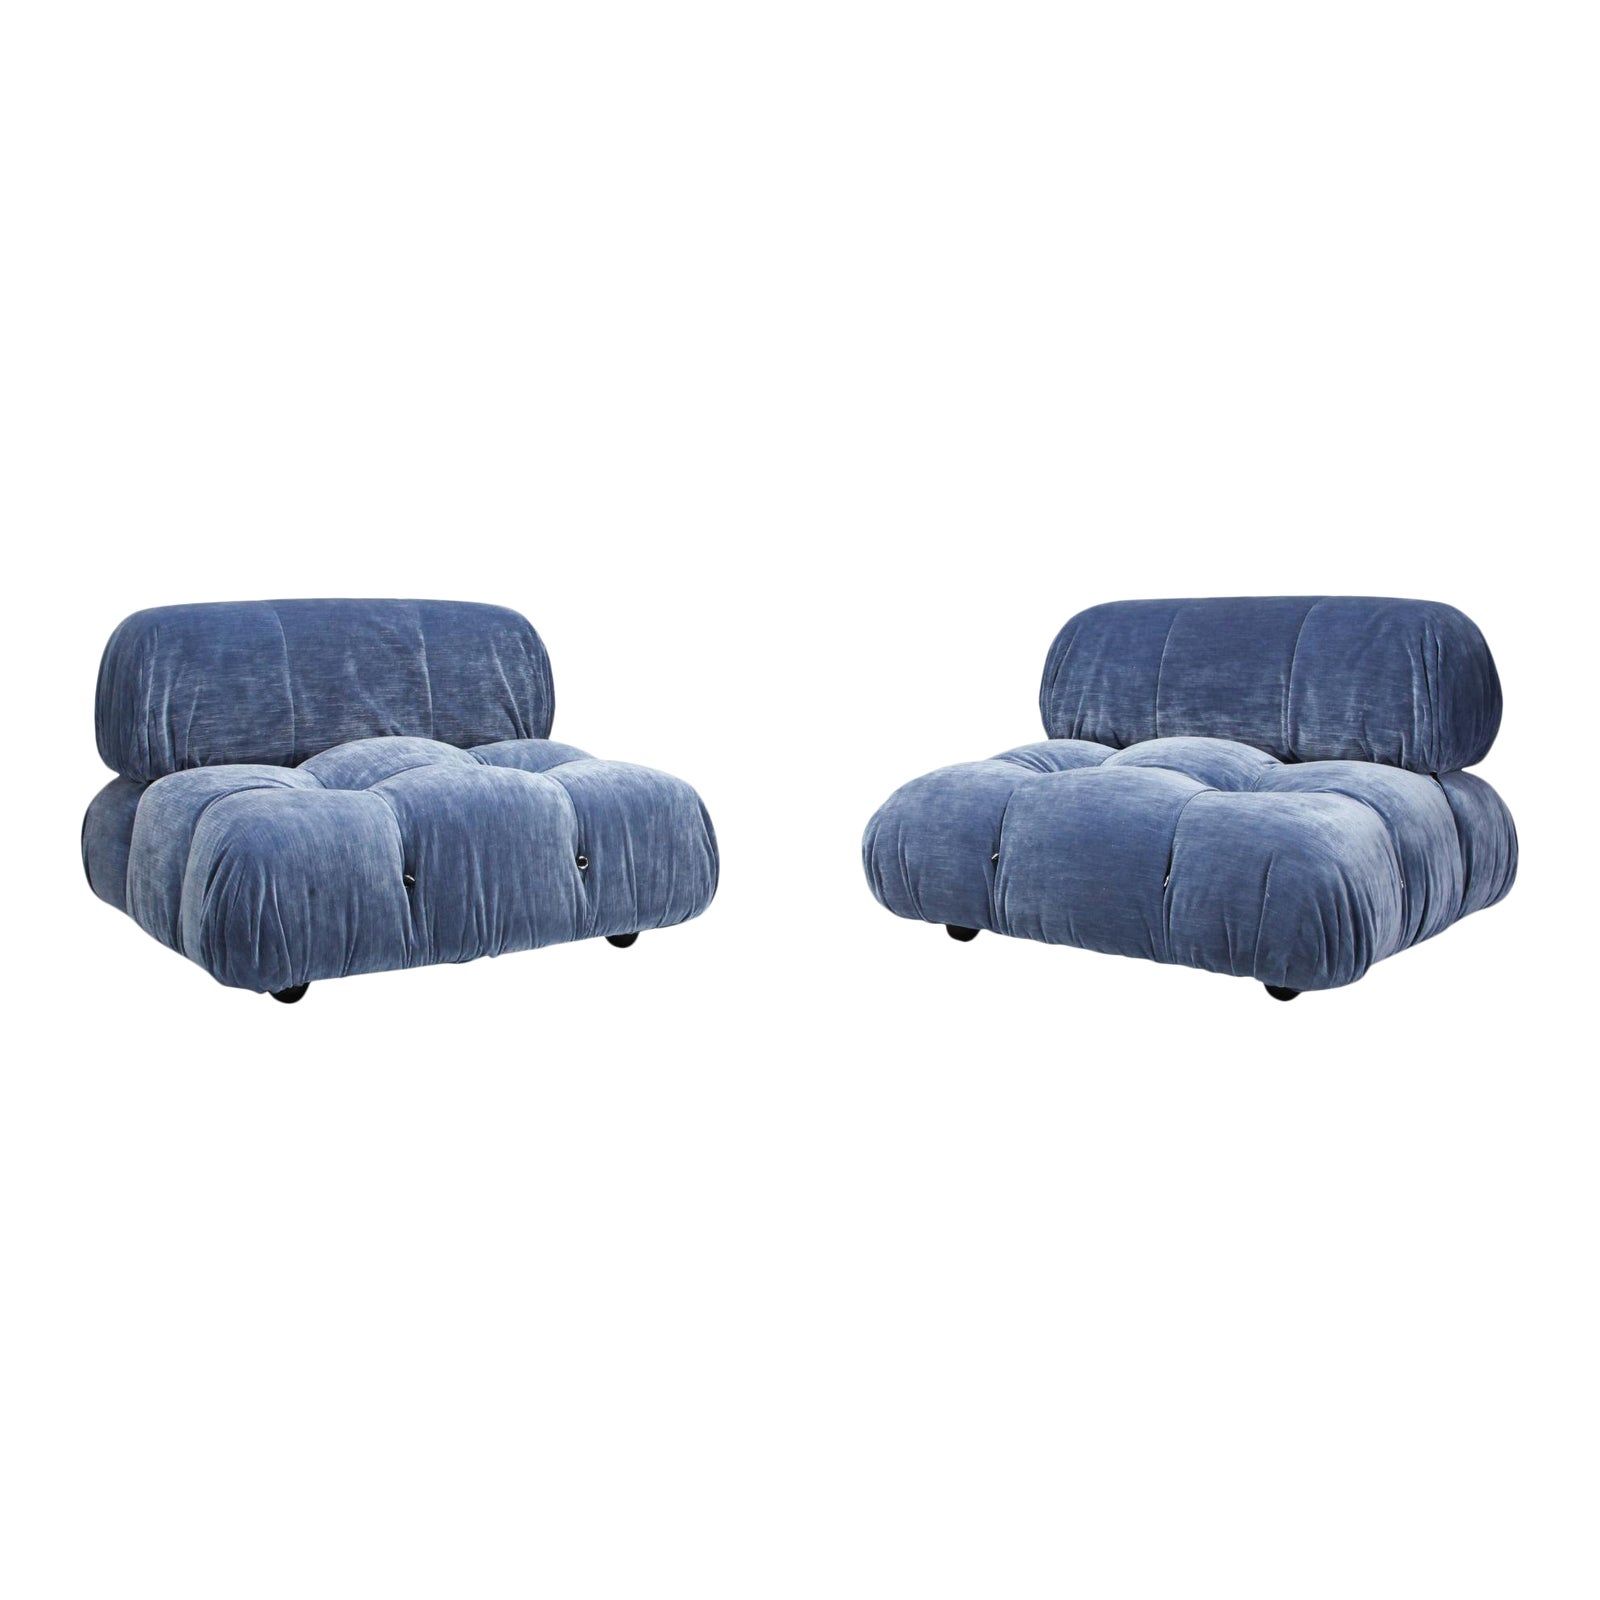 Blue Camaleonda Chairs